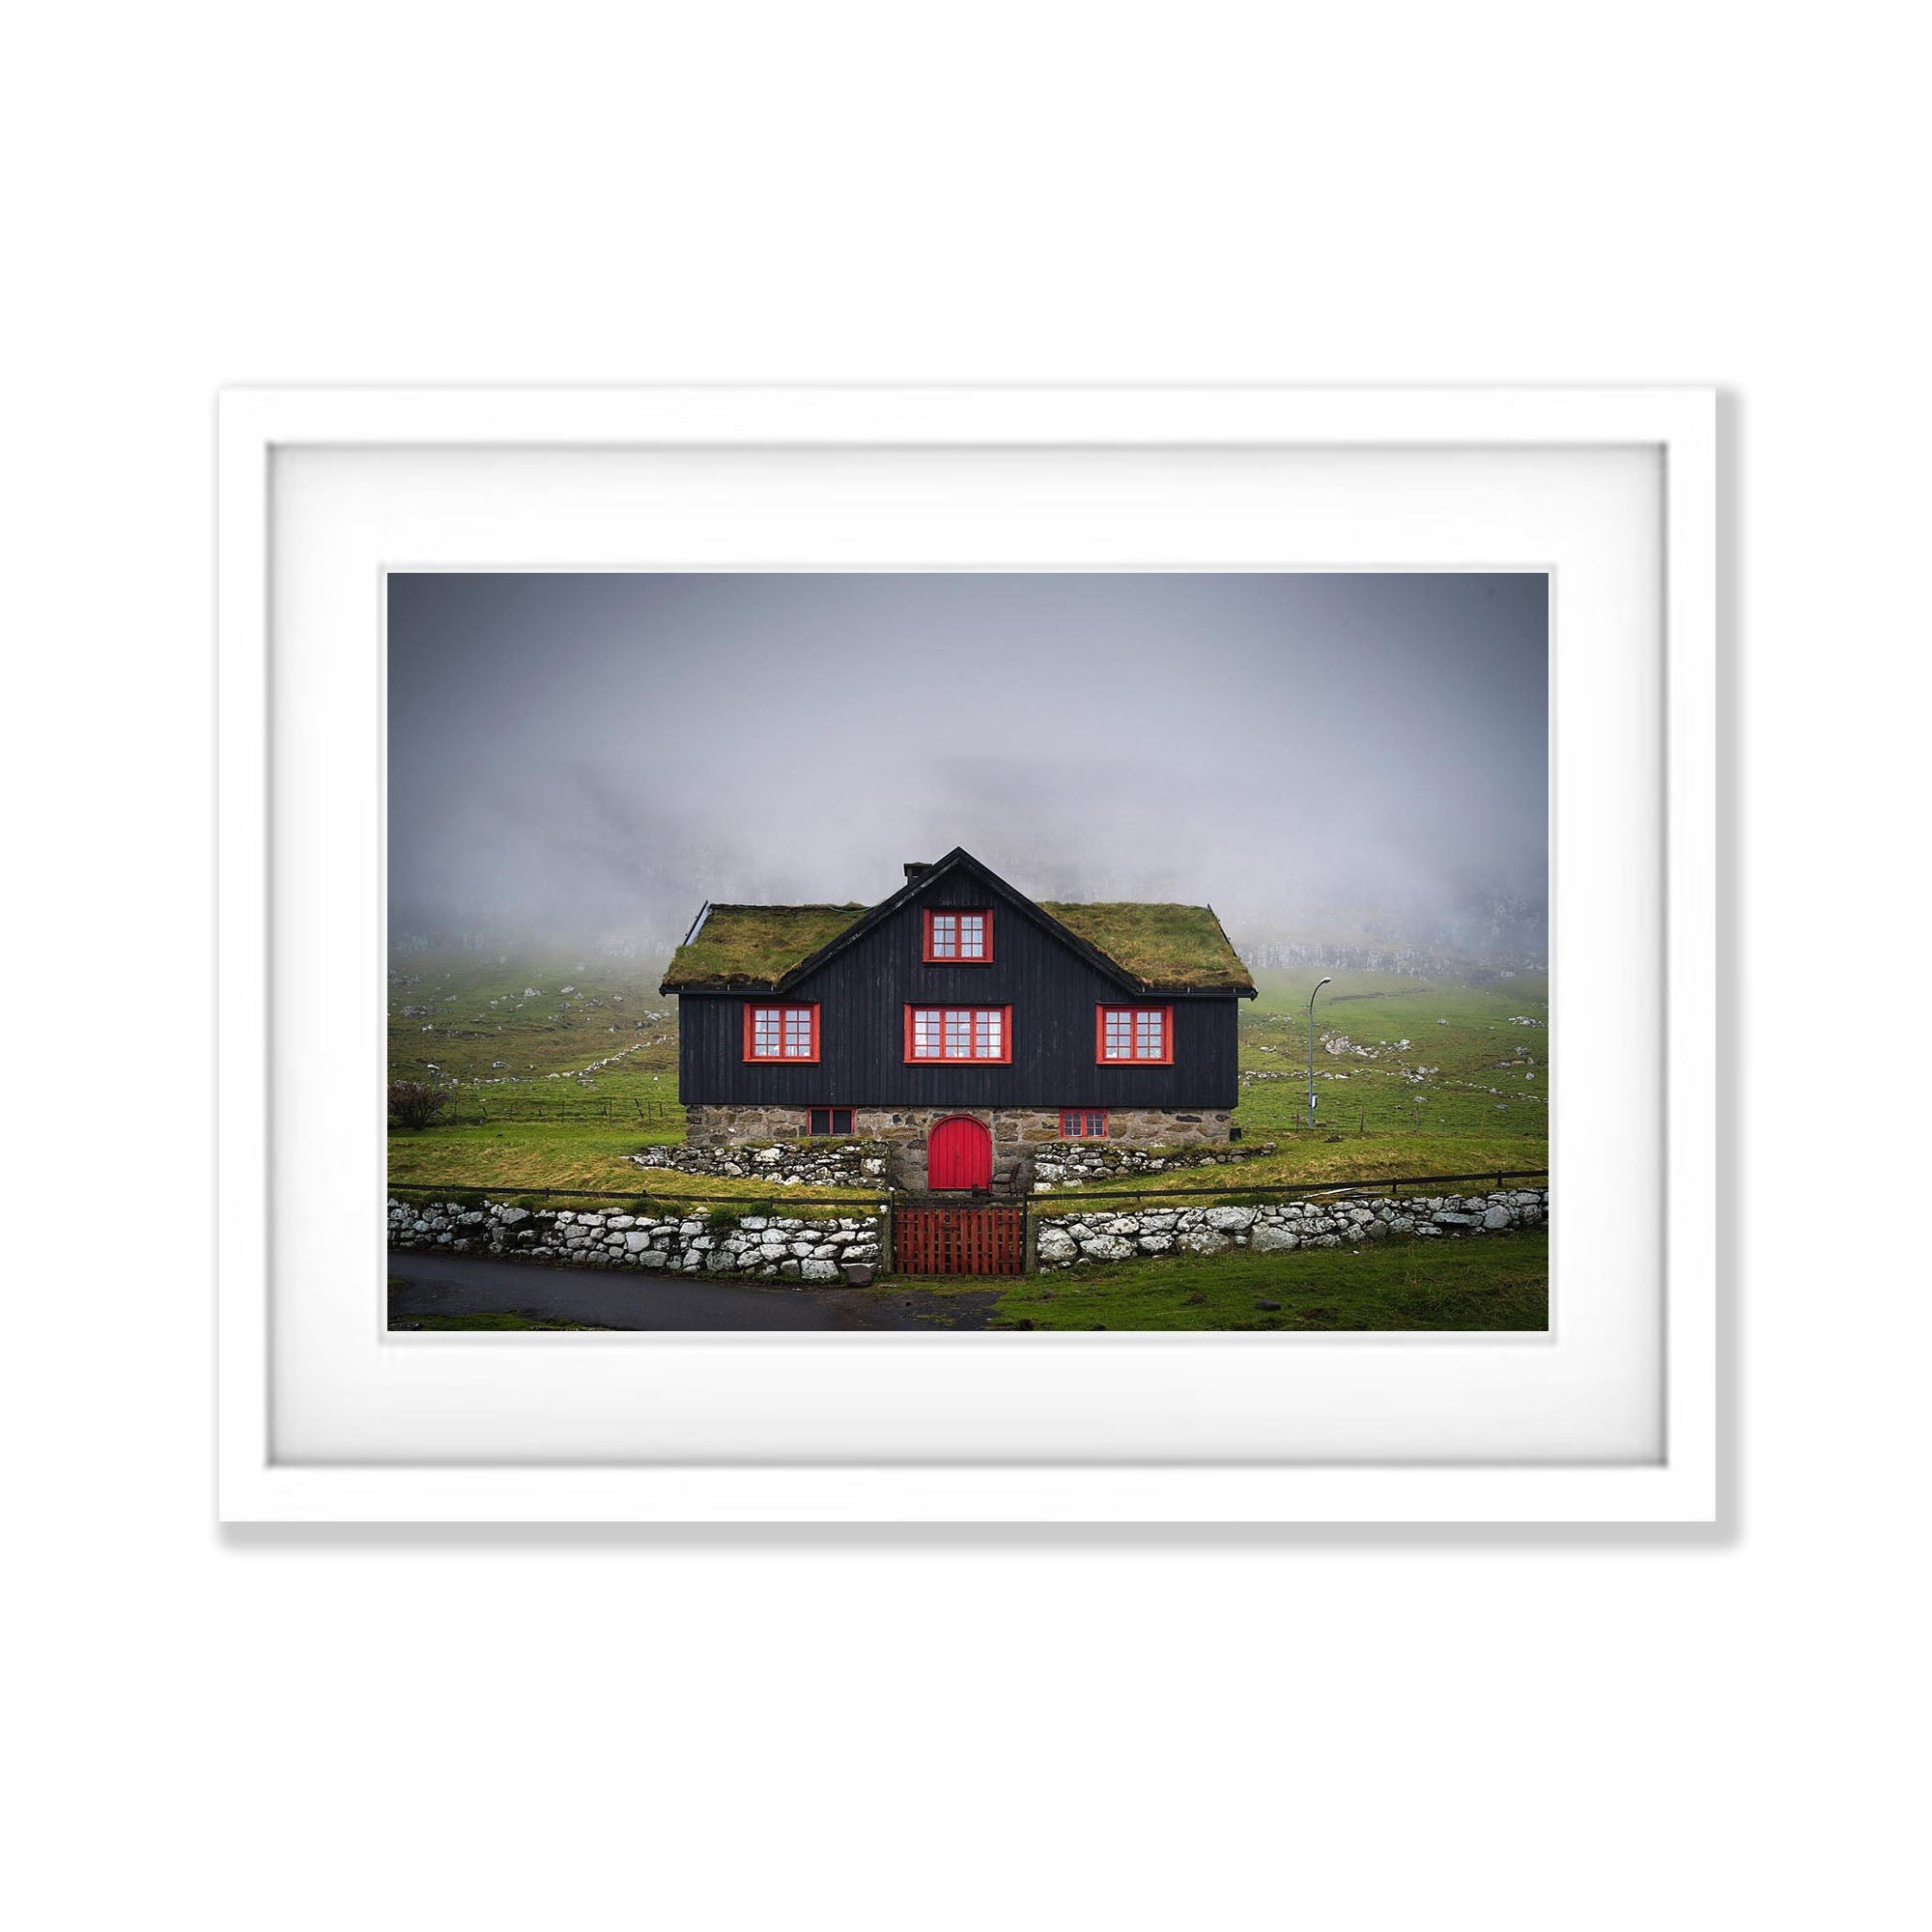 A typical Faroe Islands house